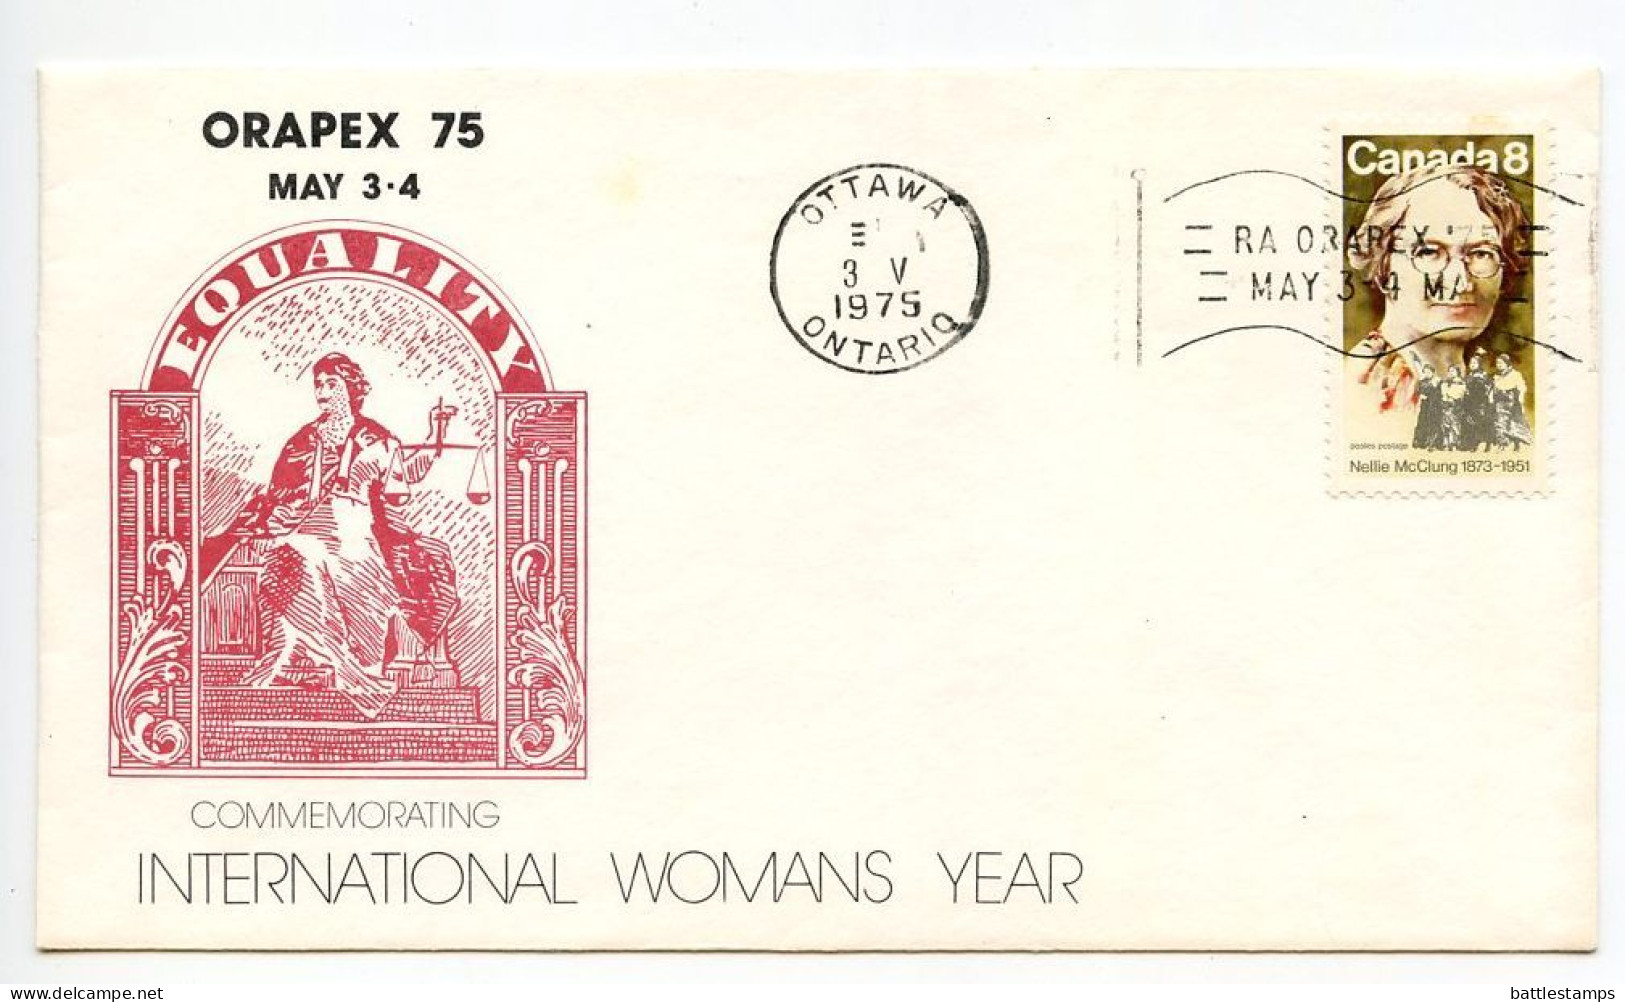 Canada 1975 Commemorative Cover - ORAPEC 75 Philatelic Exhibition - International Womans Year, Scott 622 - HerdenkingsOmslagen